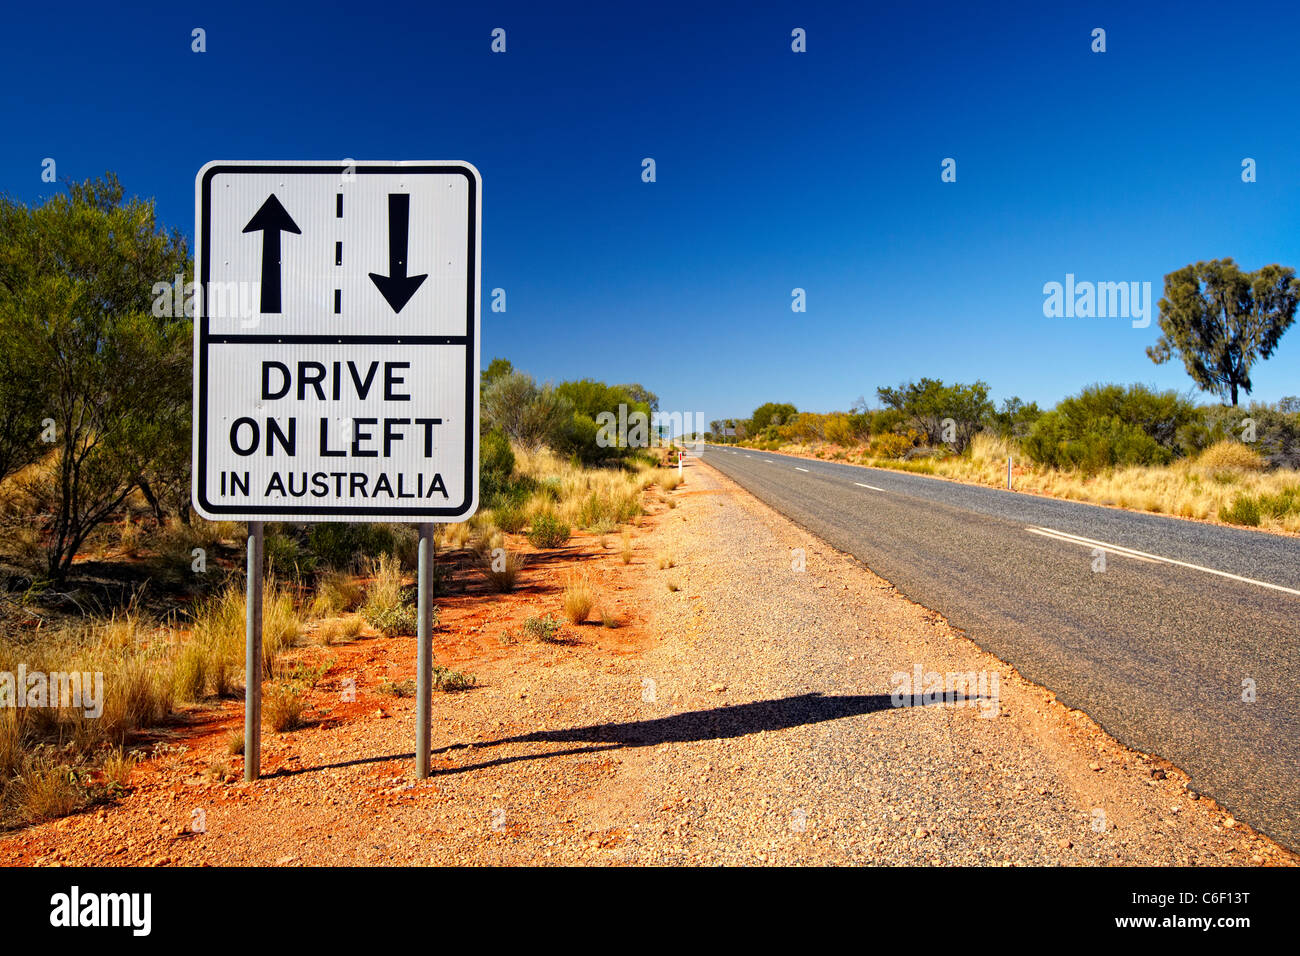 'Drive on left in Australia' sign, Australia Stock Photo